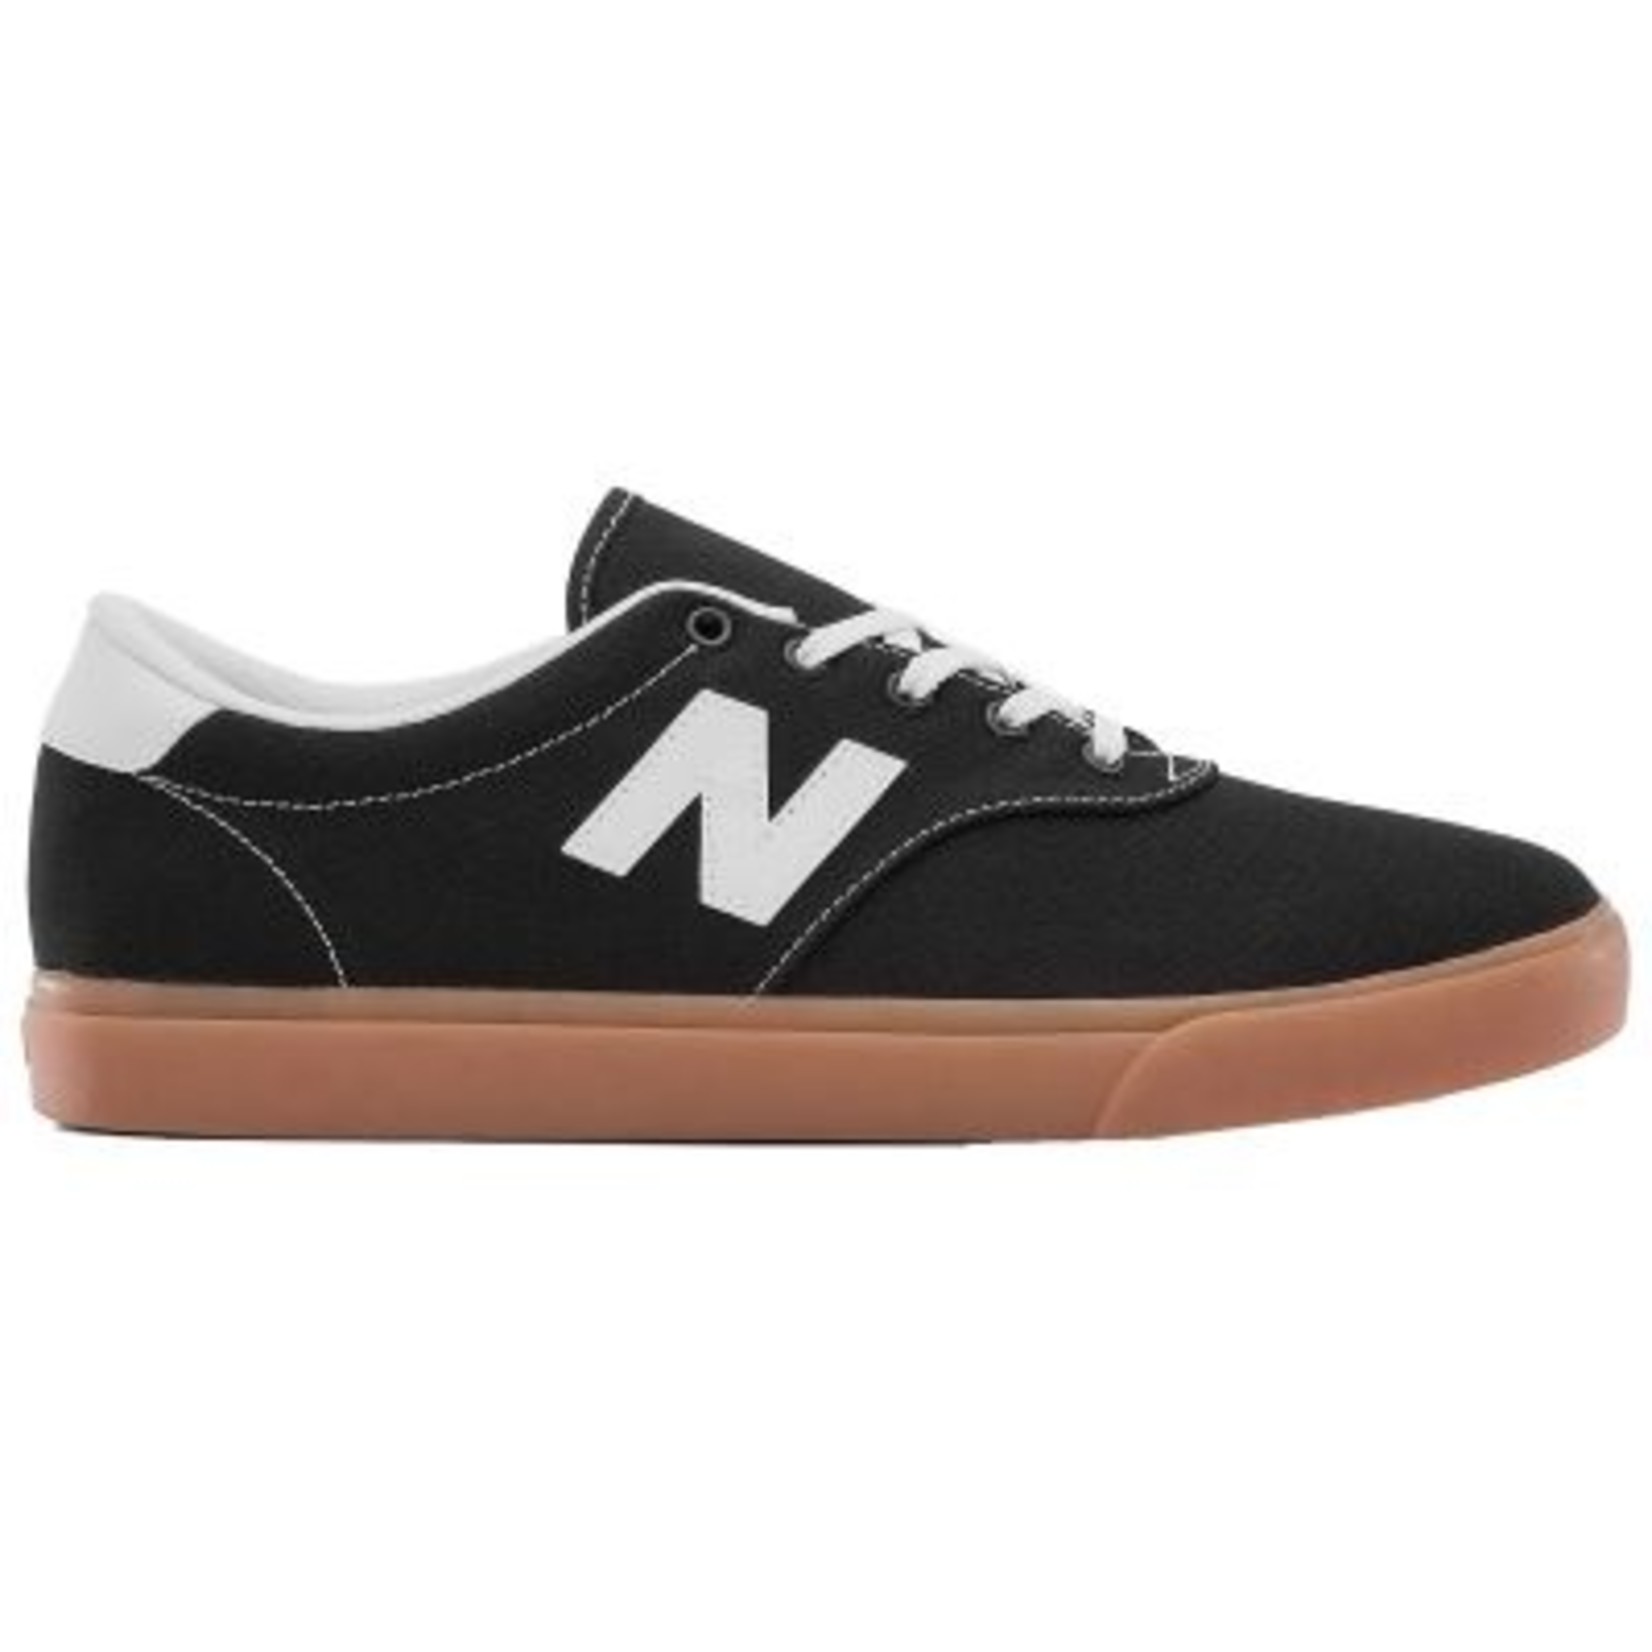 New Balance New Balance AM55 Men’s Skate Shoes